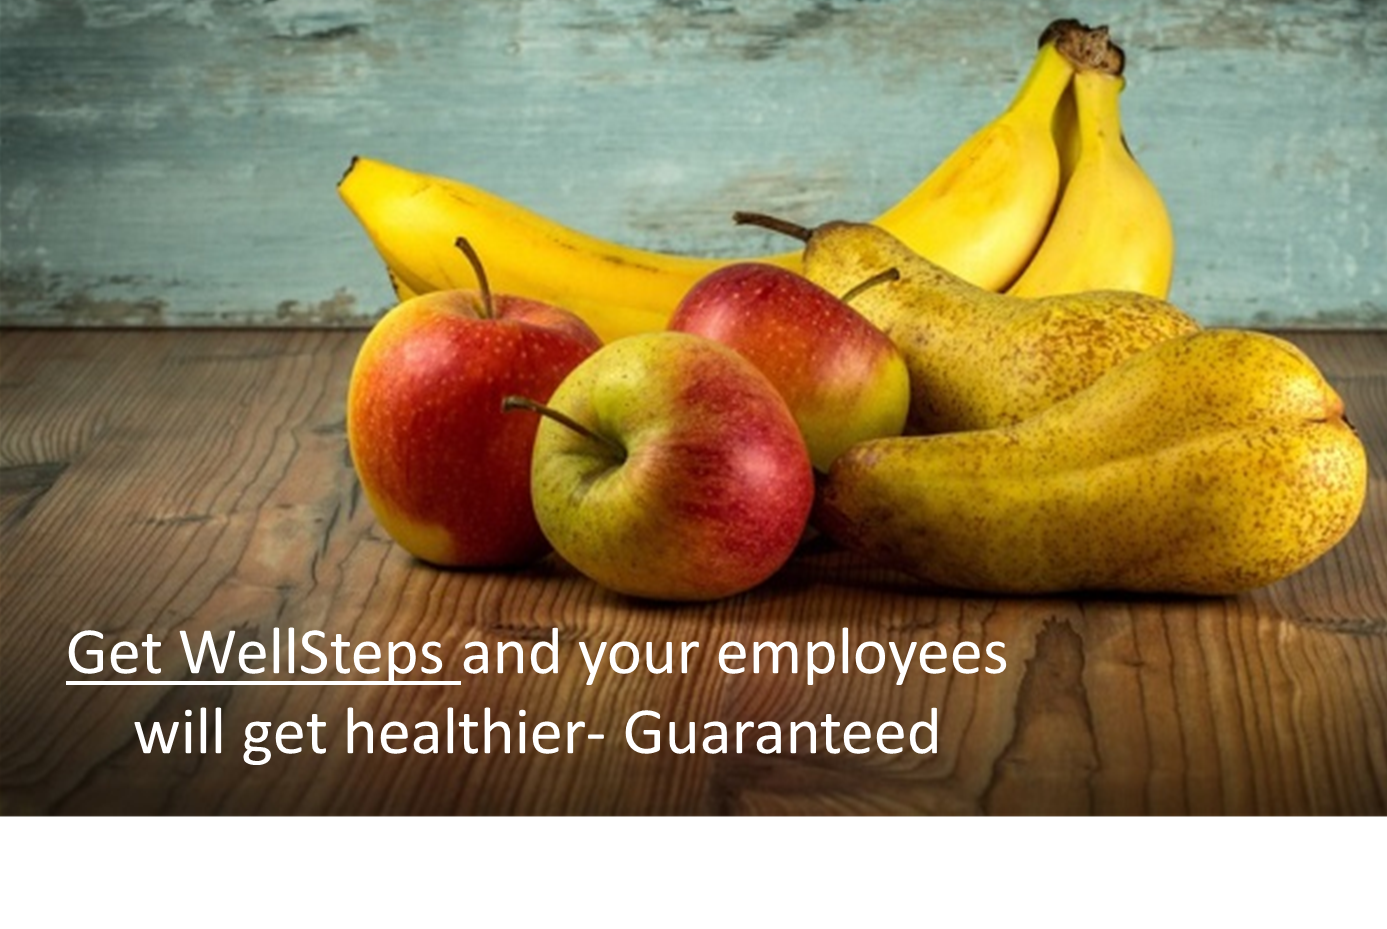 wellsteps solution, health and wellness statistics, workplace wellness programs study, benefits of workplace wellness programs 